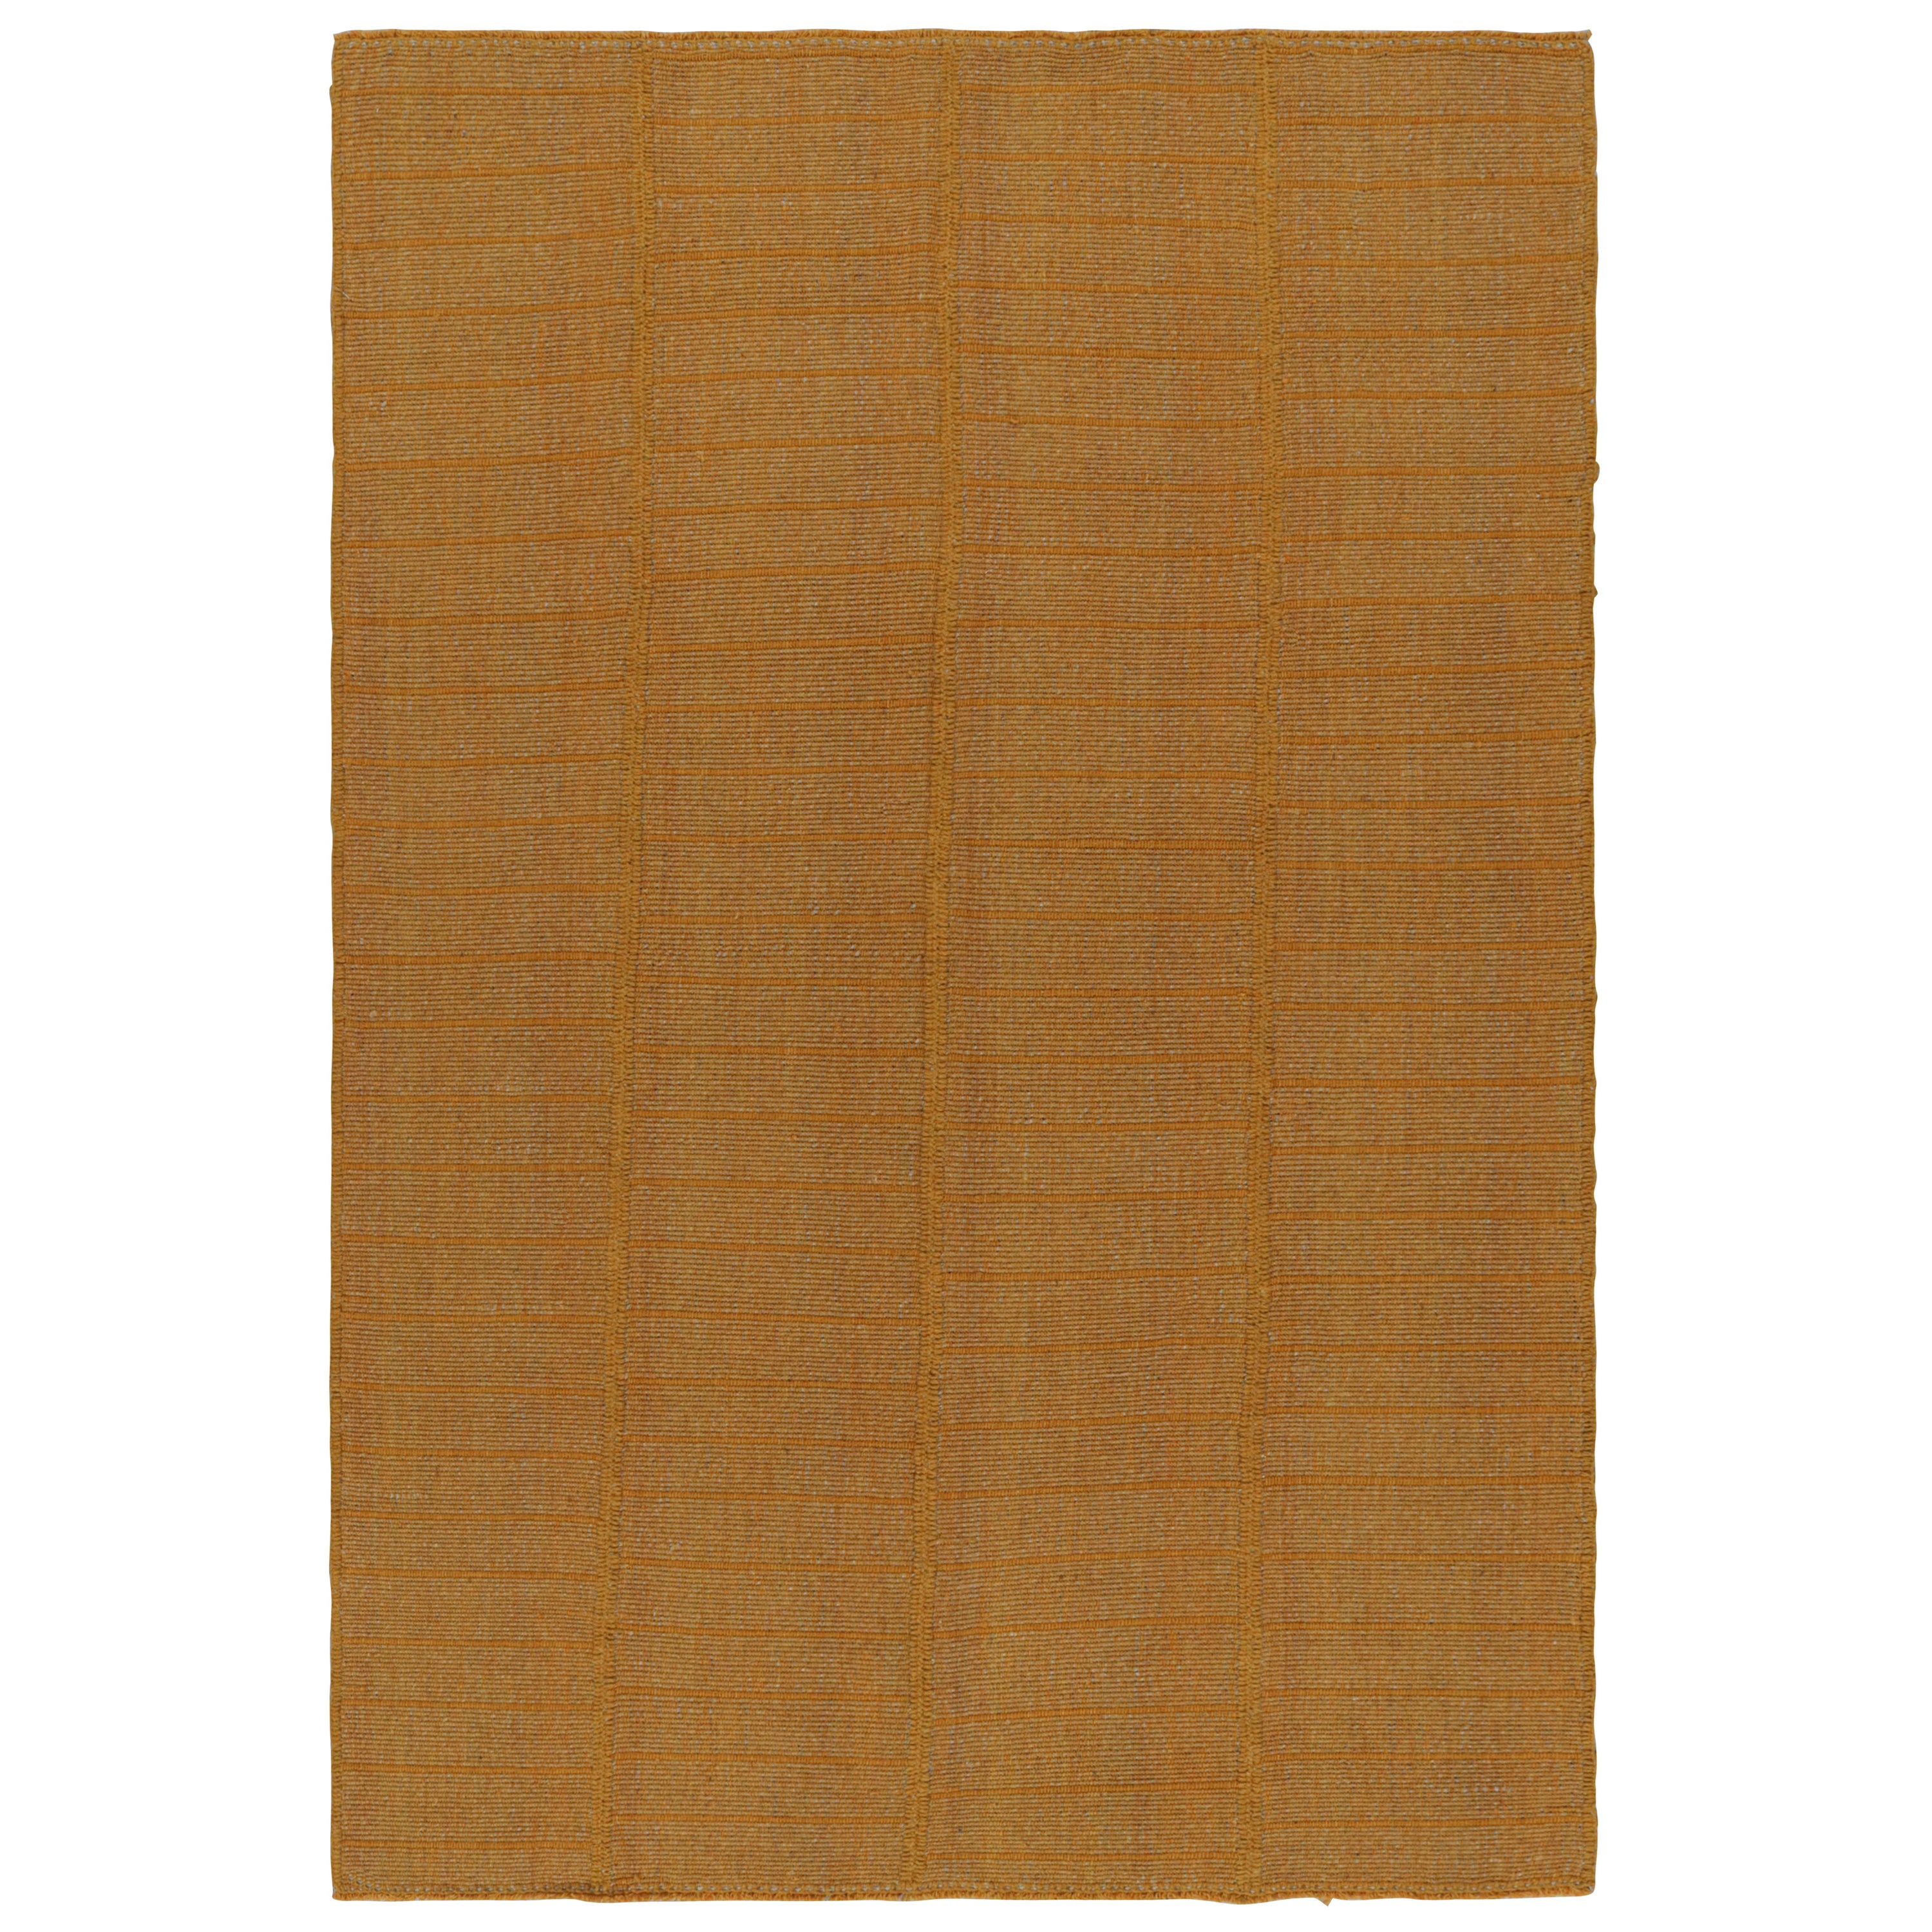 Rug & Kilim’s Modern Kilim Rug with Textural Stripes in Gold and Orange Tones